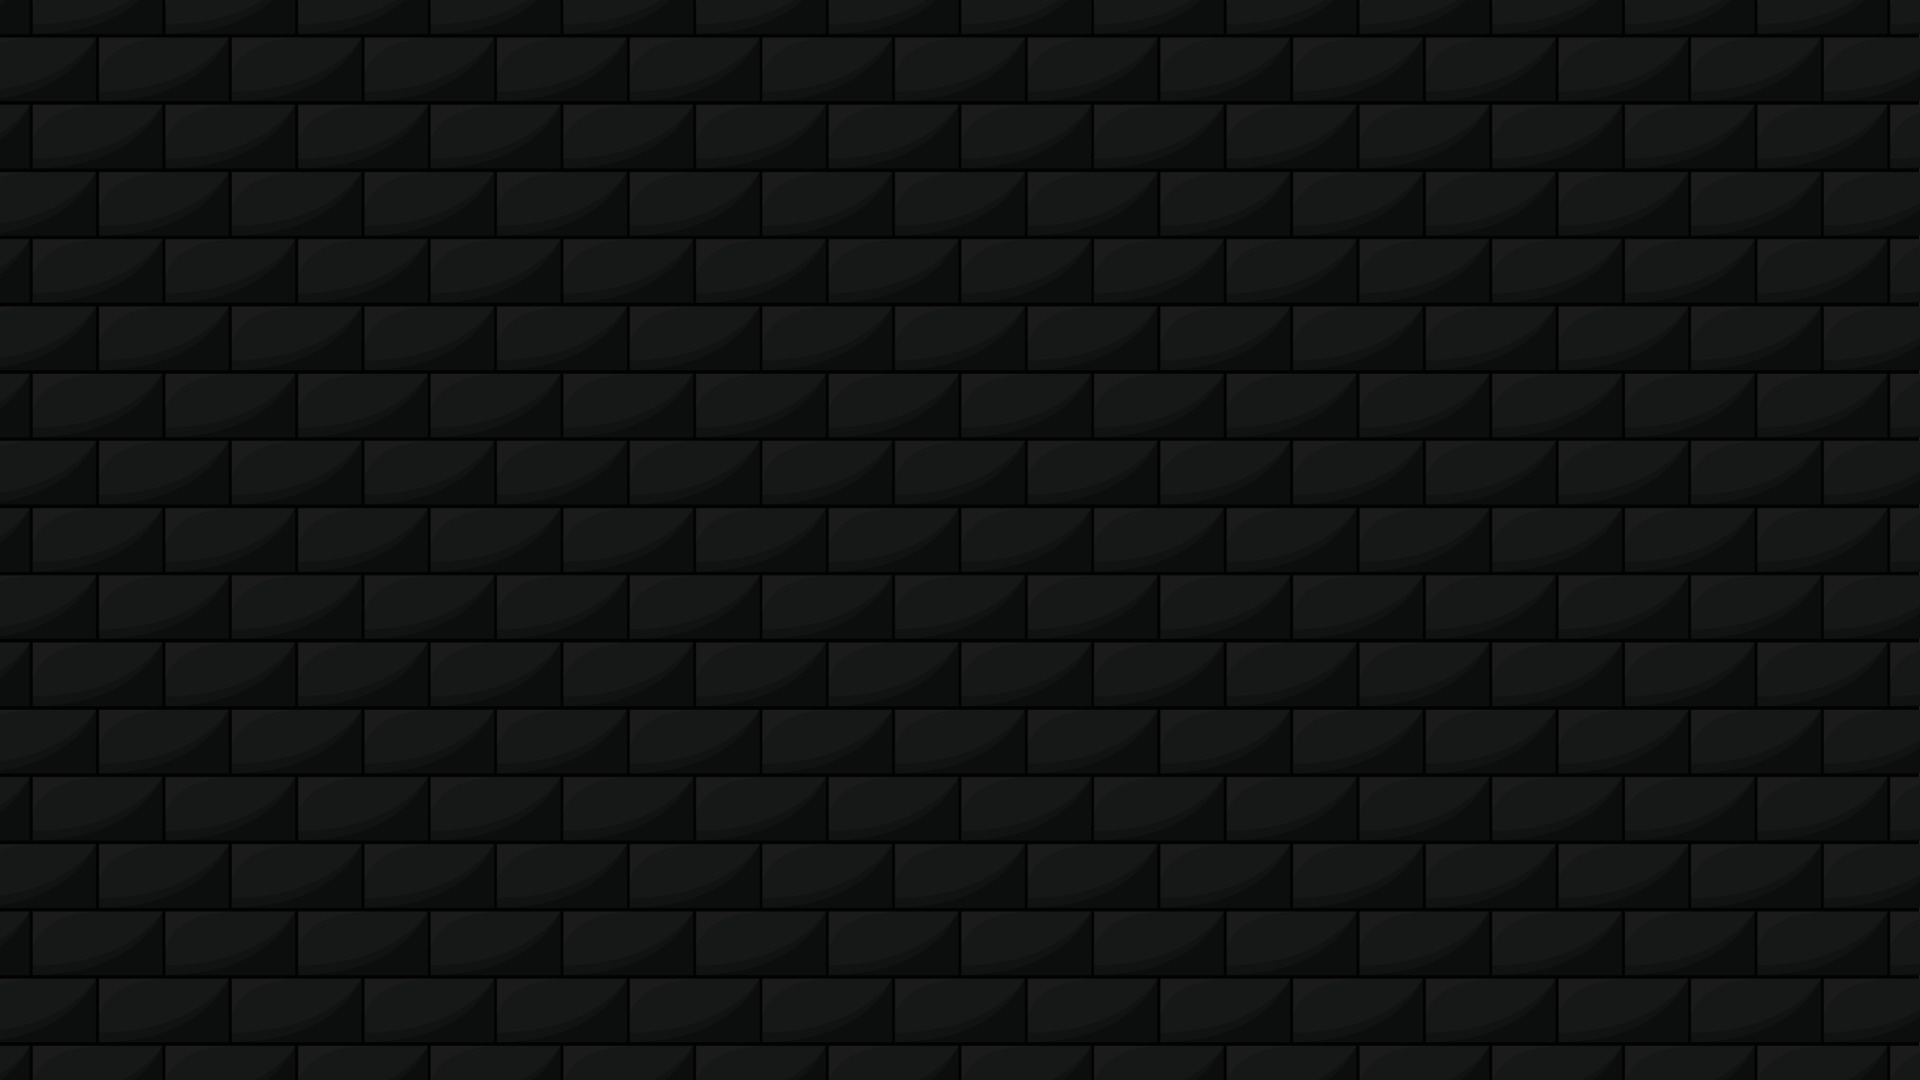 iPhoneXpapers - ve93-brick-road-dark-patterns